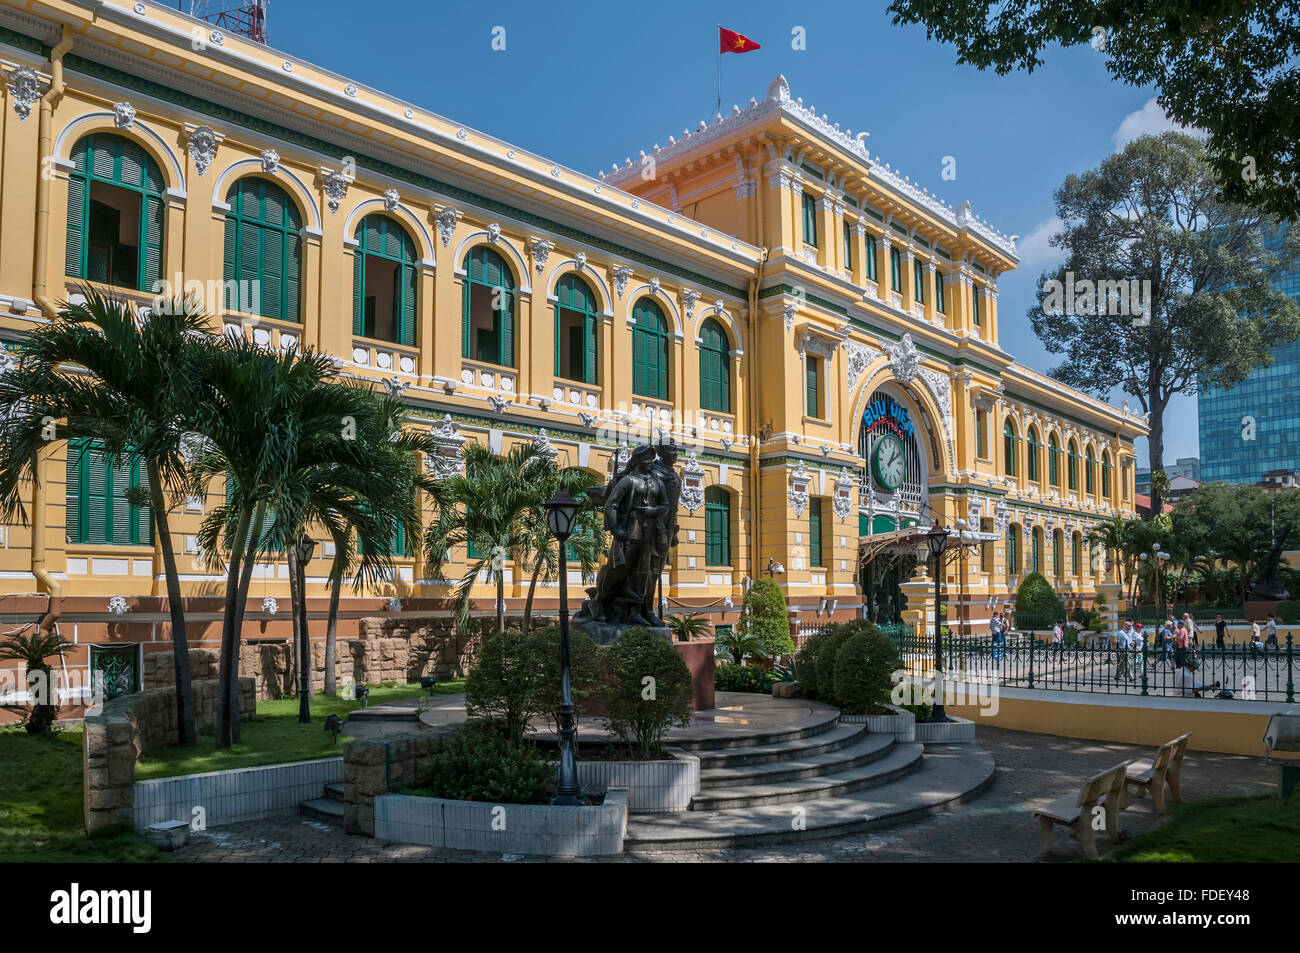 Viet Nam. Vietnam. East Asia. The neo classical Saigon Central Post Office. Ho Chi Minh Ho Chi Minh city. Saigon Stock Photo